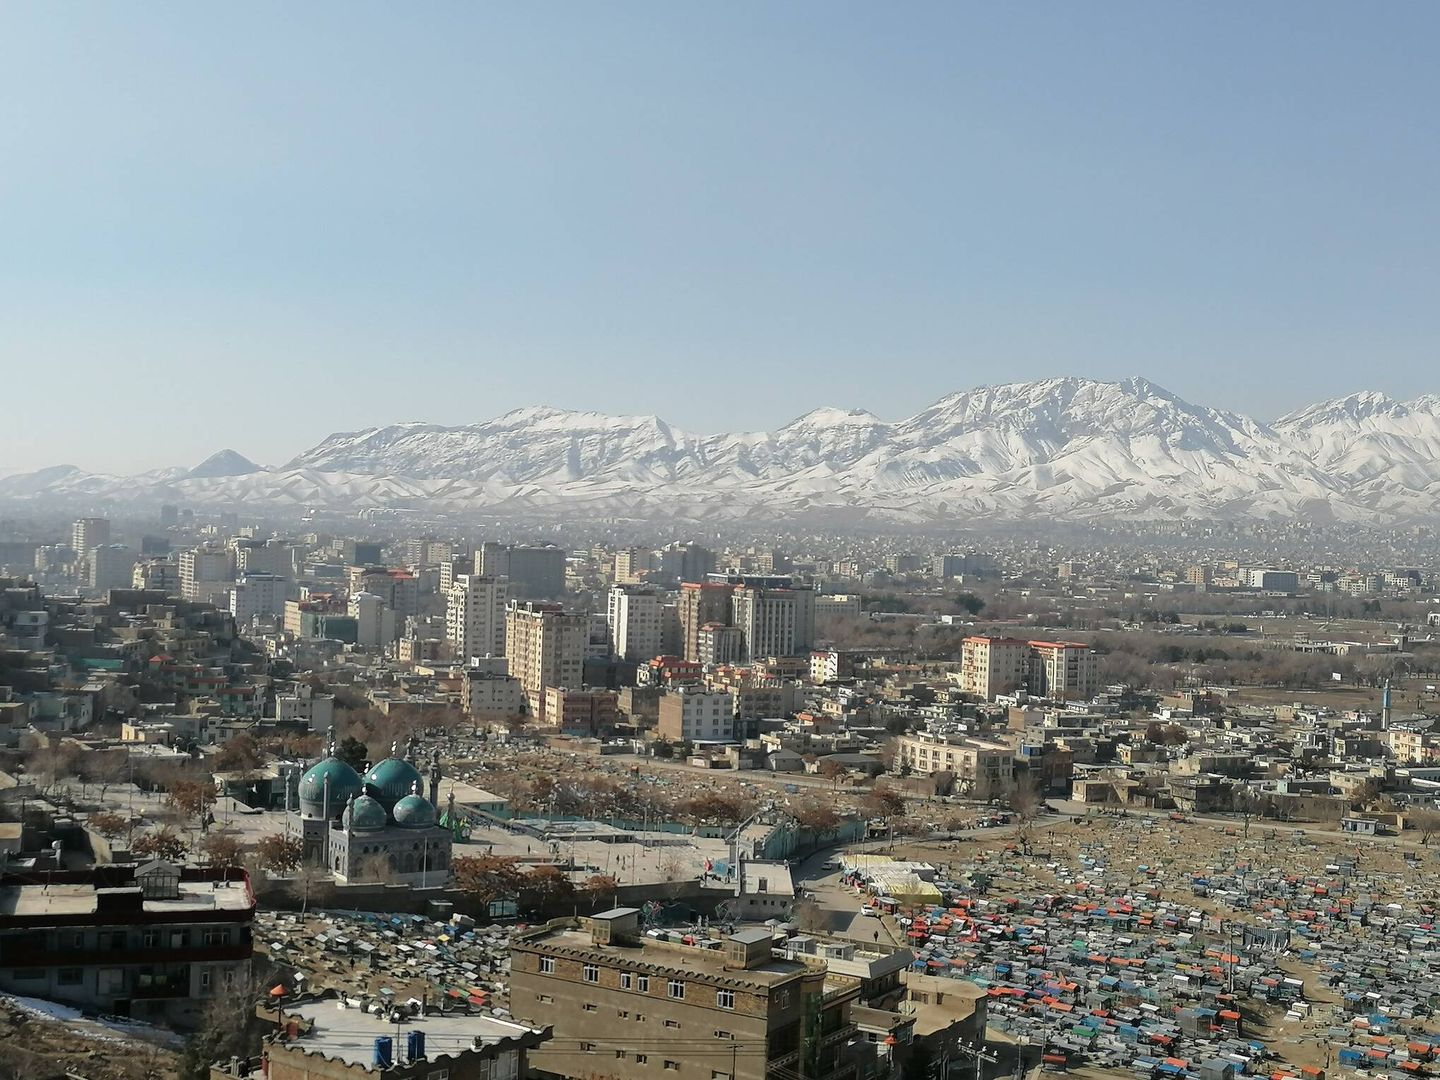 Imagen aérea de Kabul, la capital de Afganistán. (Untamed borders)